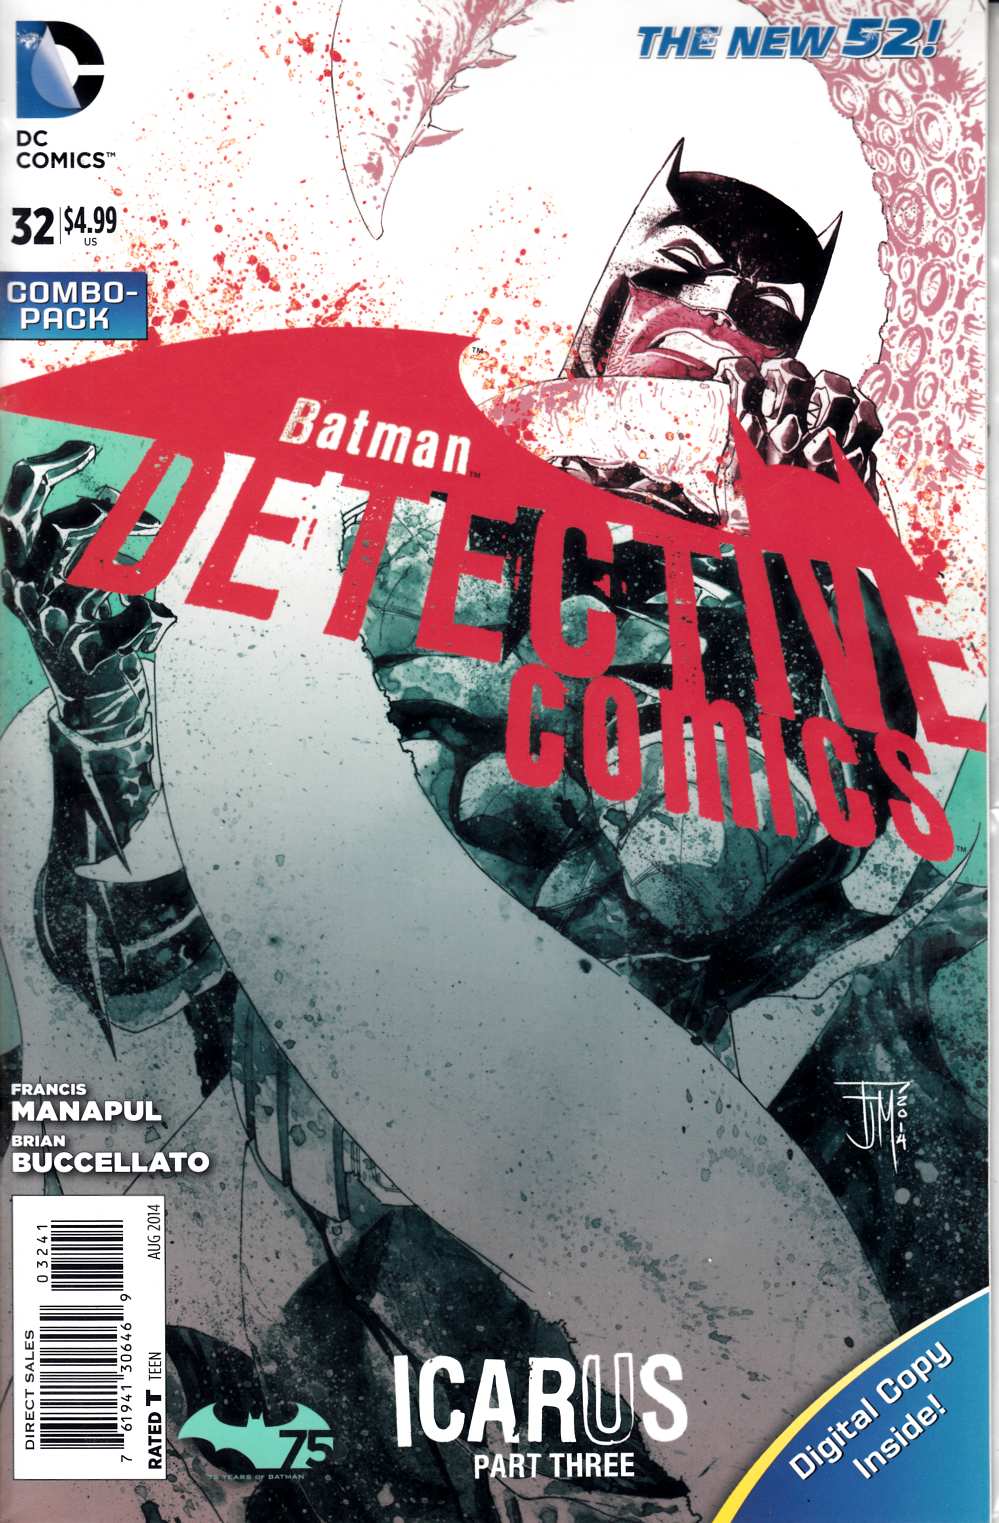 Detective Comics #32 Combo Pack